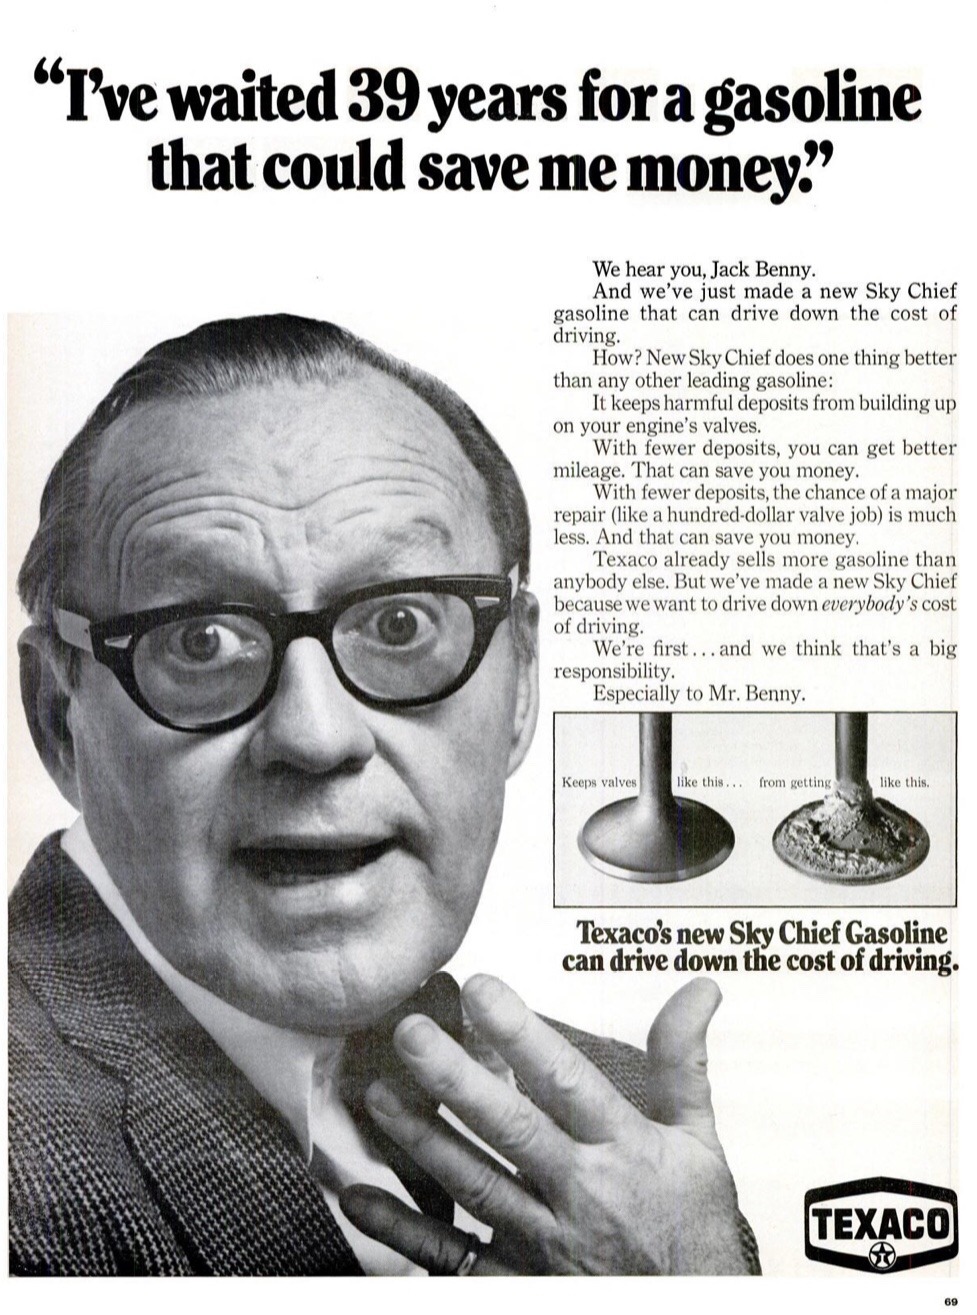 Vintage Ads — 1968 Texaco ad featuring Jack Benny